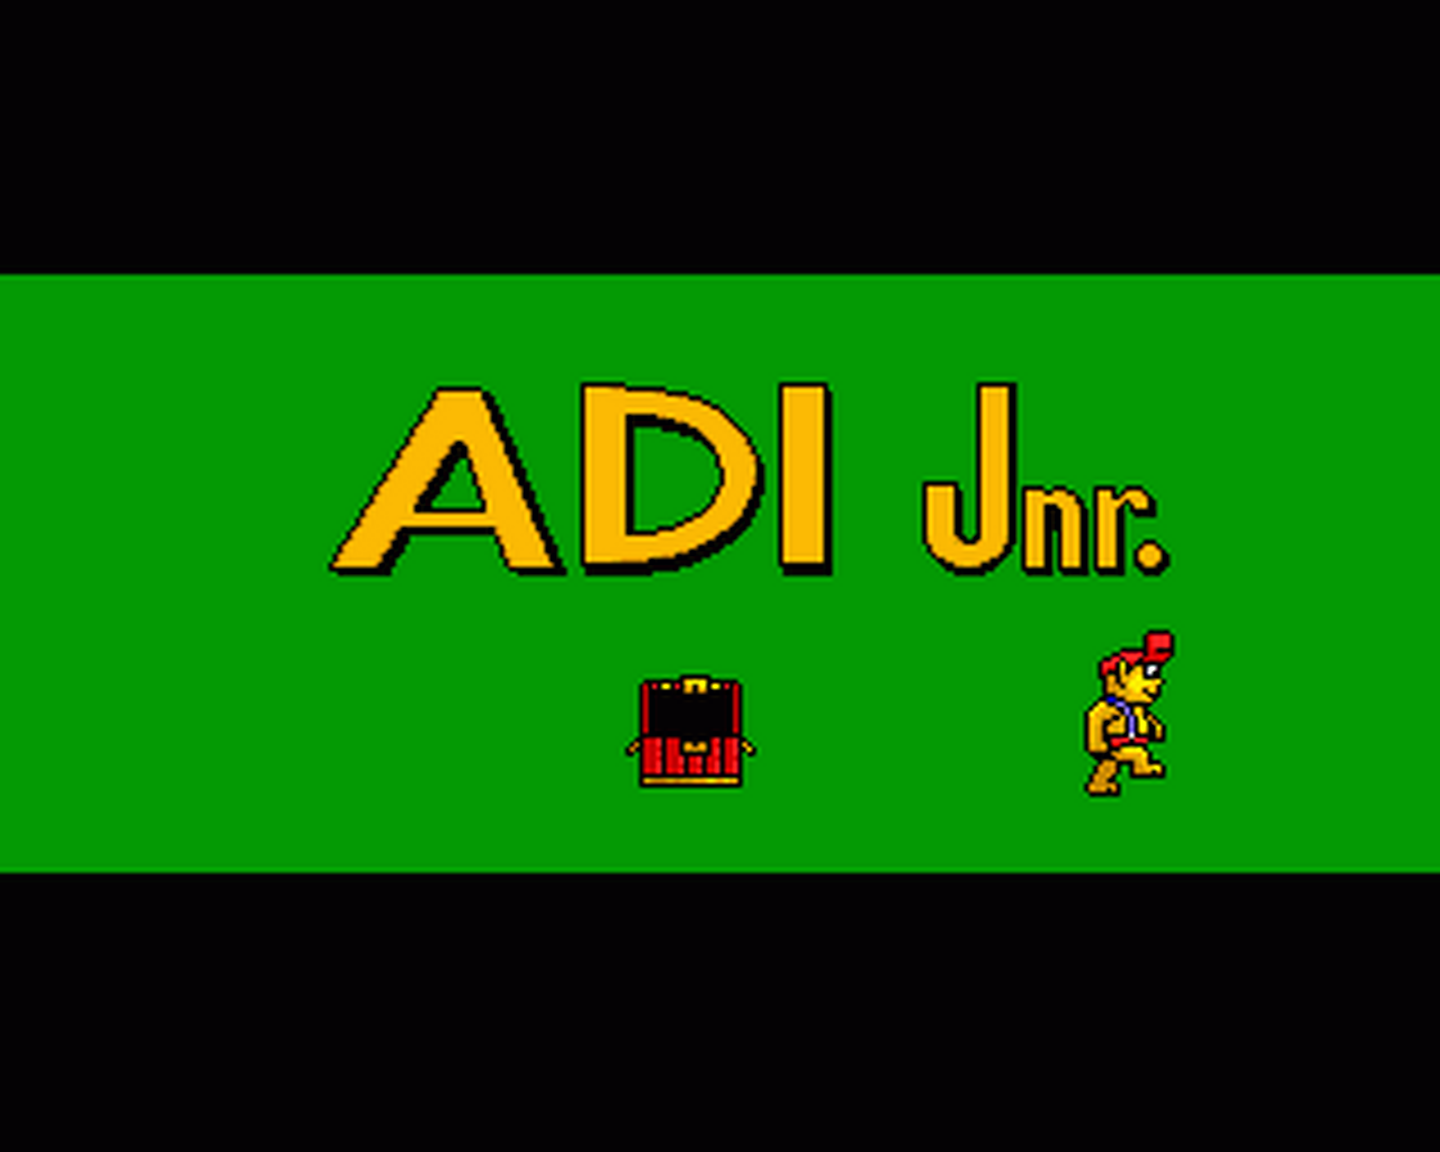 Amiga GameBase ADI_Junior_Helps_with_Reading_-_6/7_Years Europress 1994